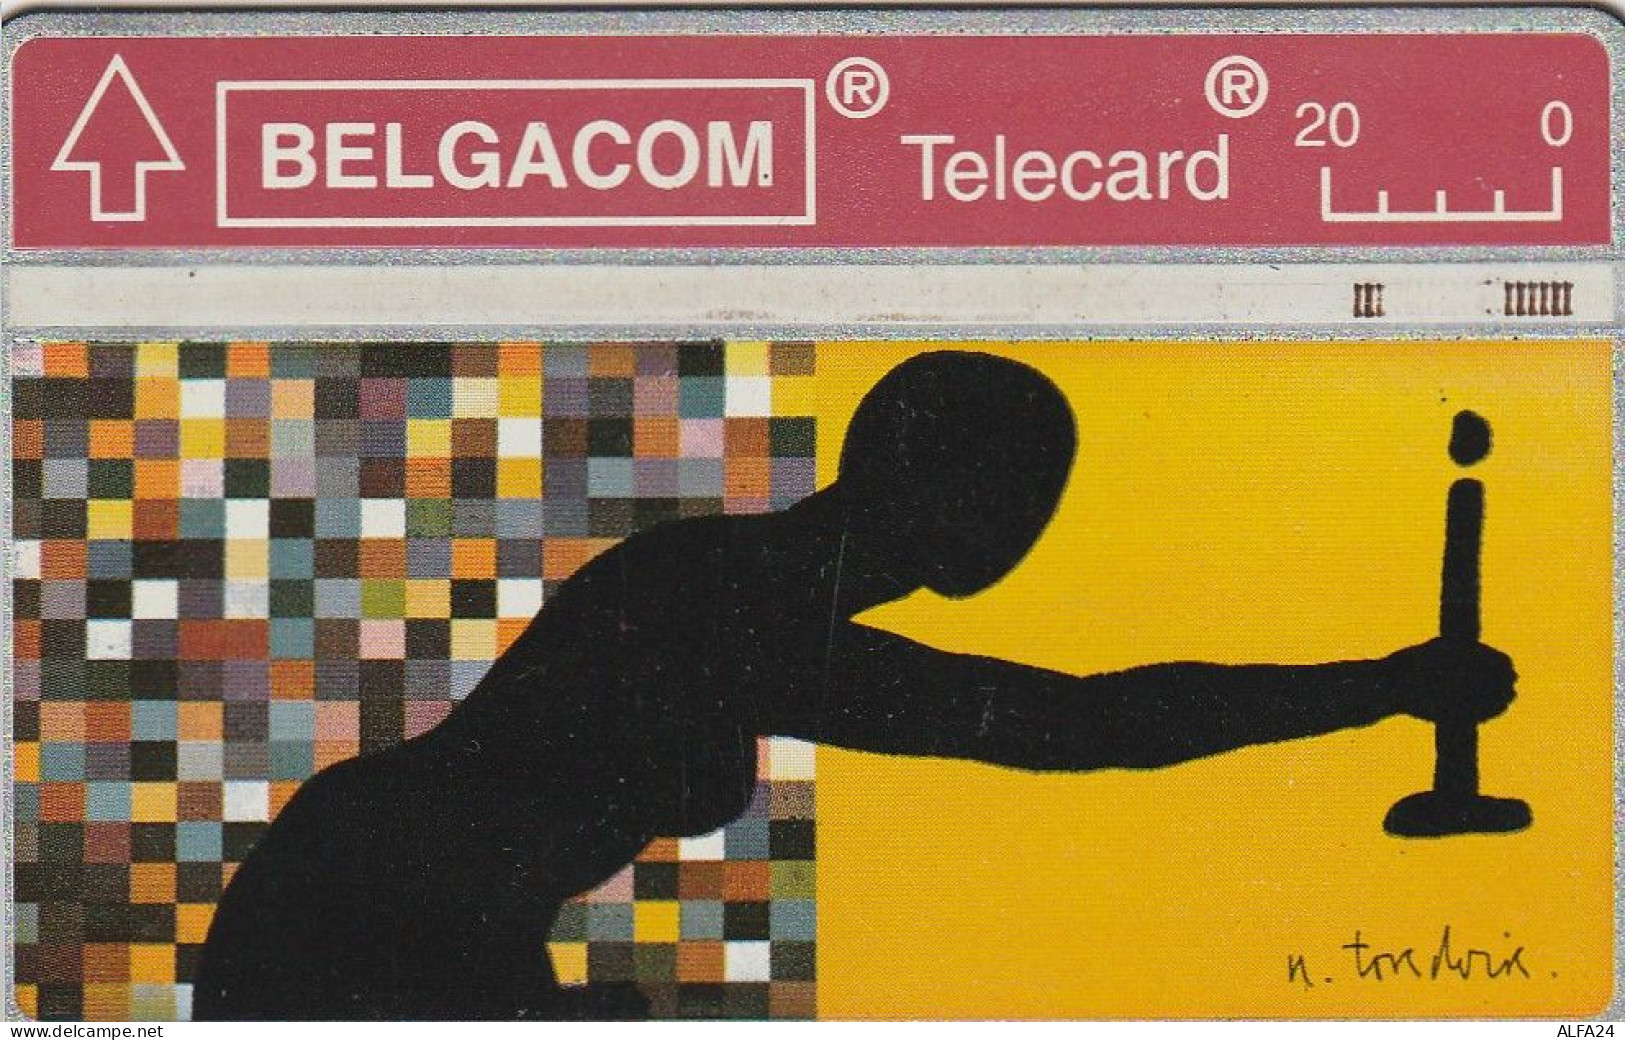 PHONE CARD BELGIO LG (CV6633 - Senza Chip